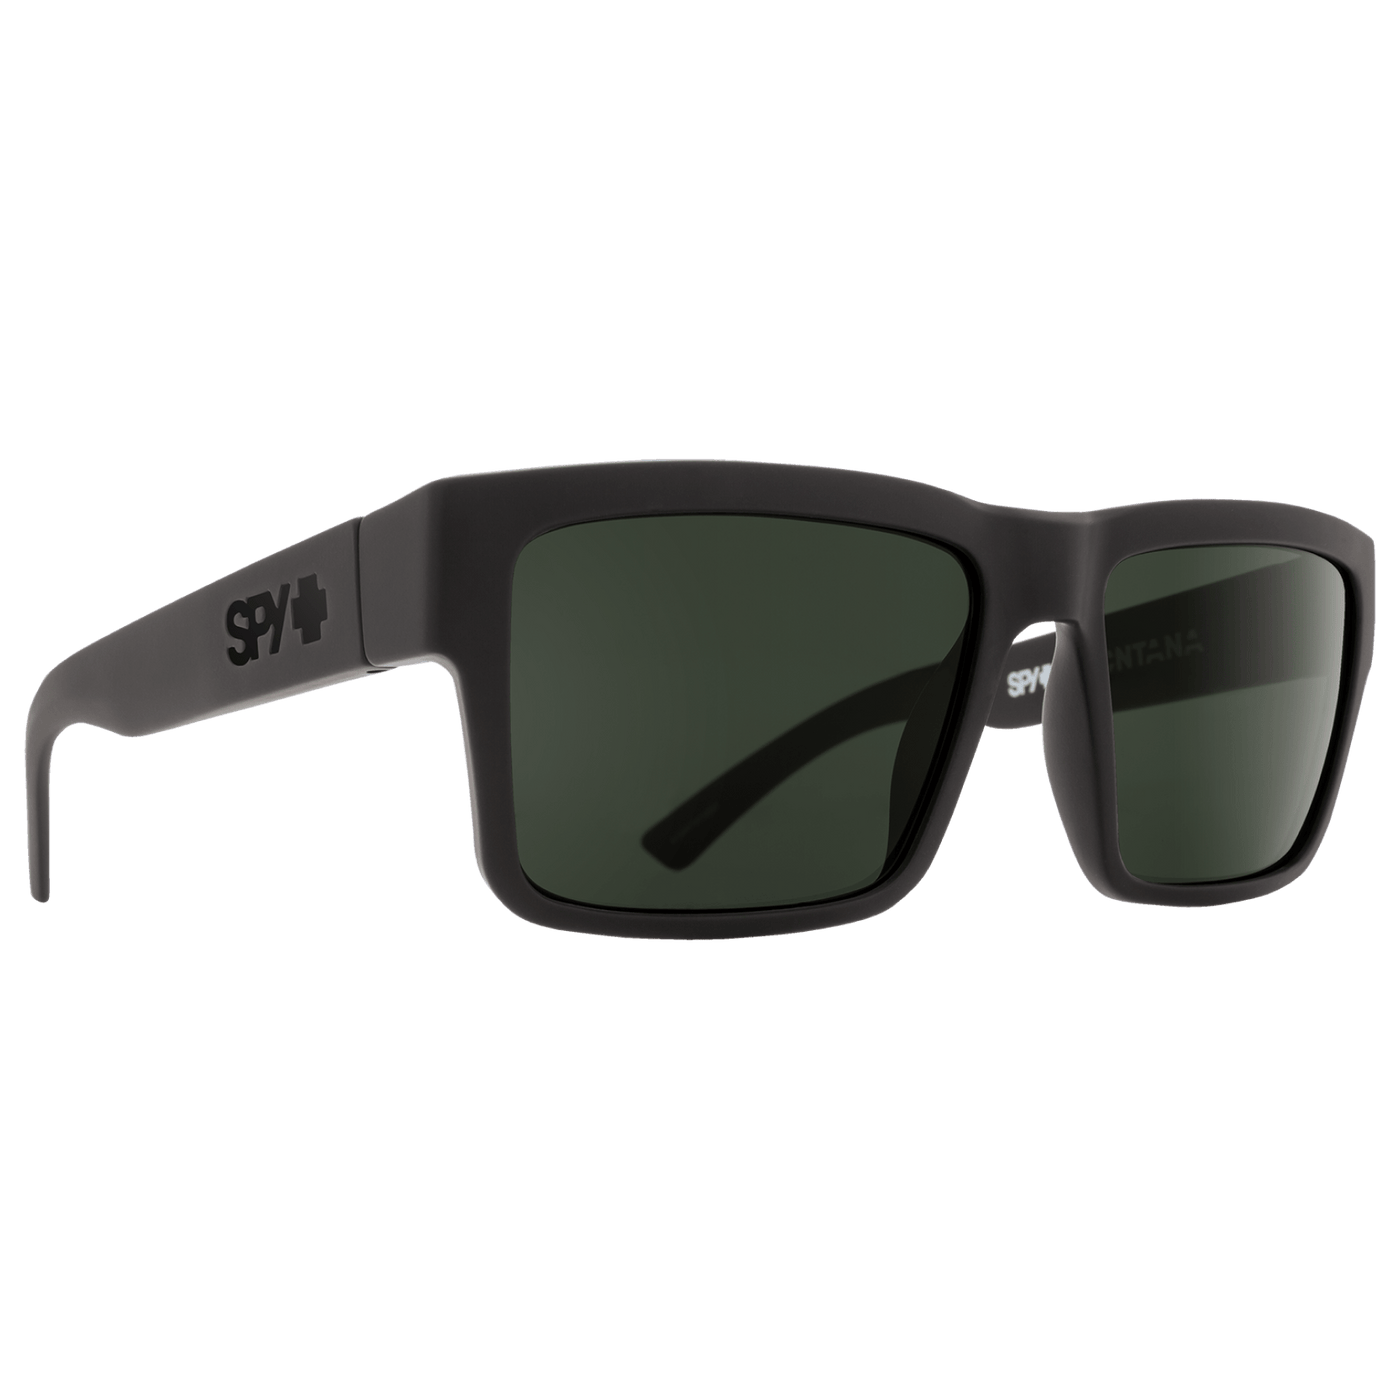 SPY MONTANA Polarized Sunglasses, Happy Lens - Gray/Green 8Lines Shop - Fast Shipping